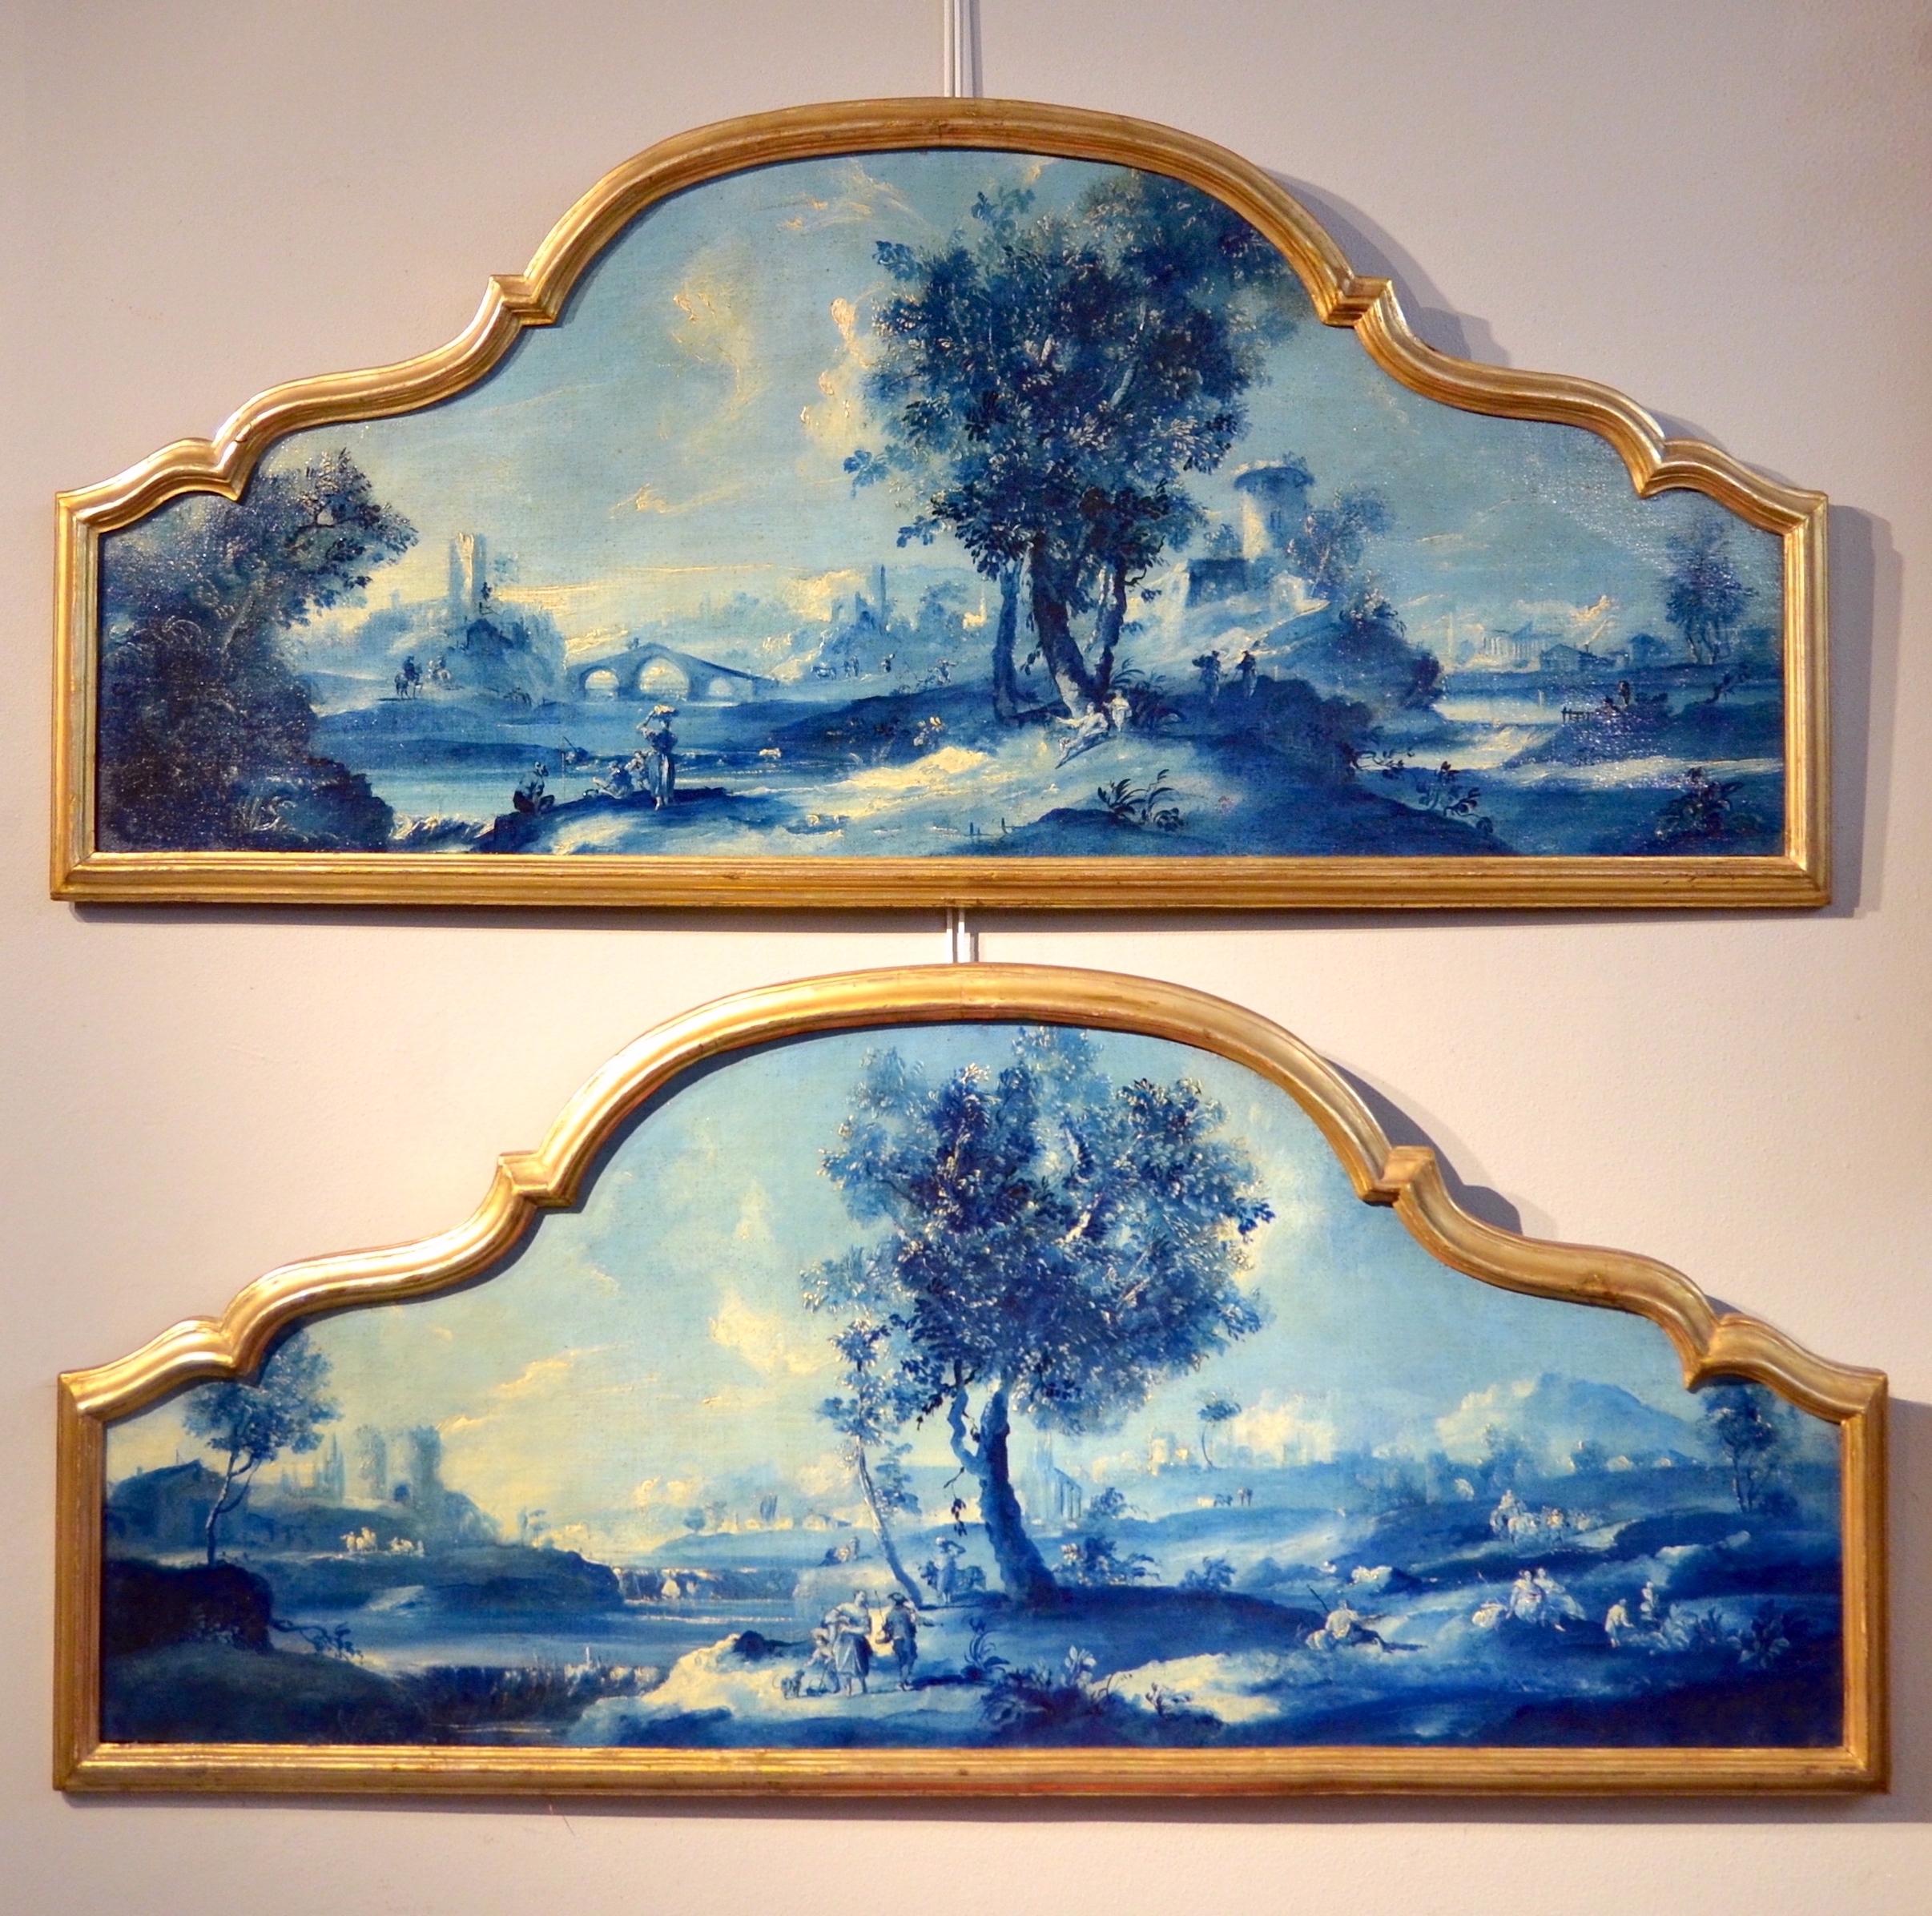 Venetian painter of the mid-eighteenth century Landscape Painting - Paint Oil on canvas Pair Landscape Wood See Lake Venezia Italy Baroque Ricci Art